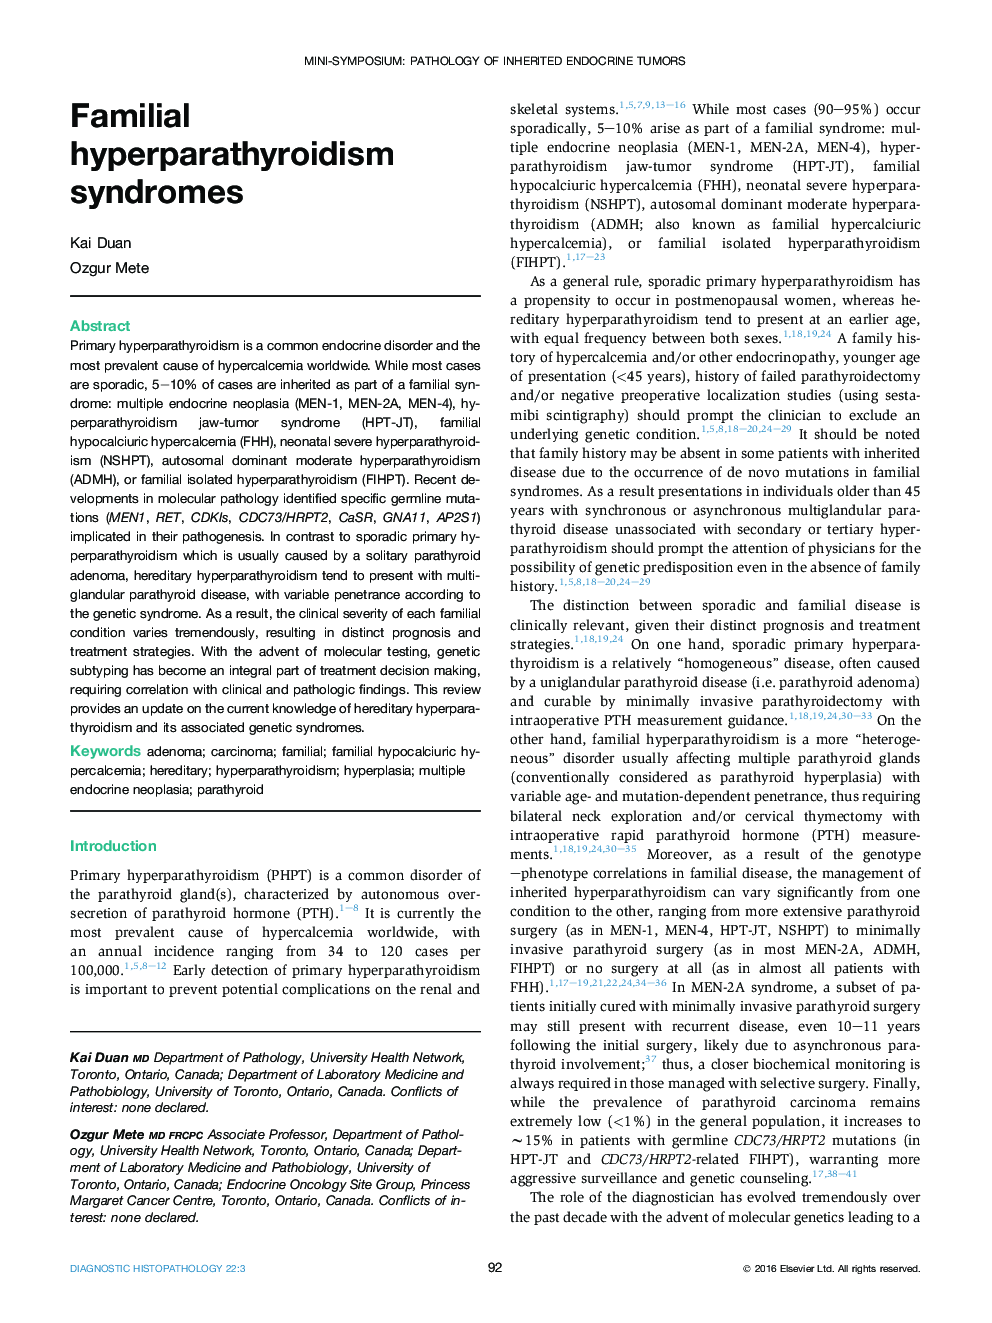 Familial hyperparathyroidism syndromes